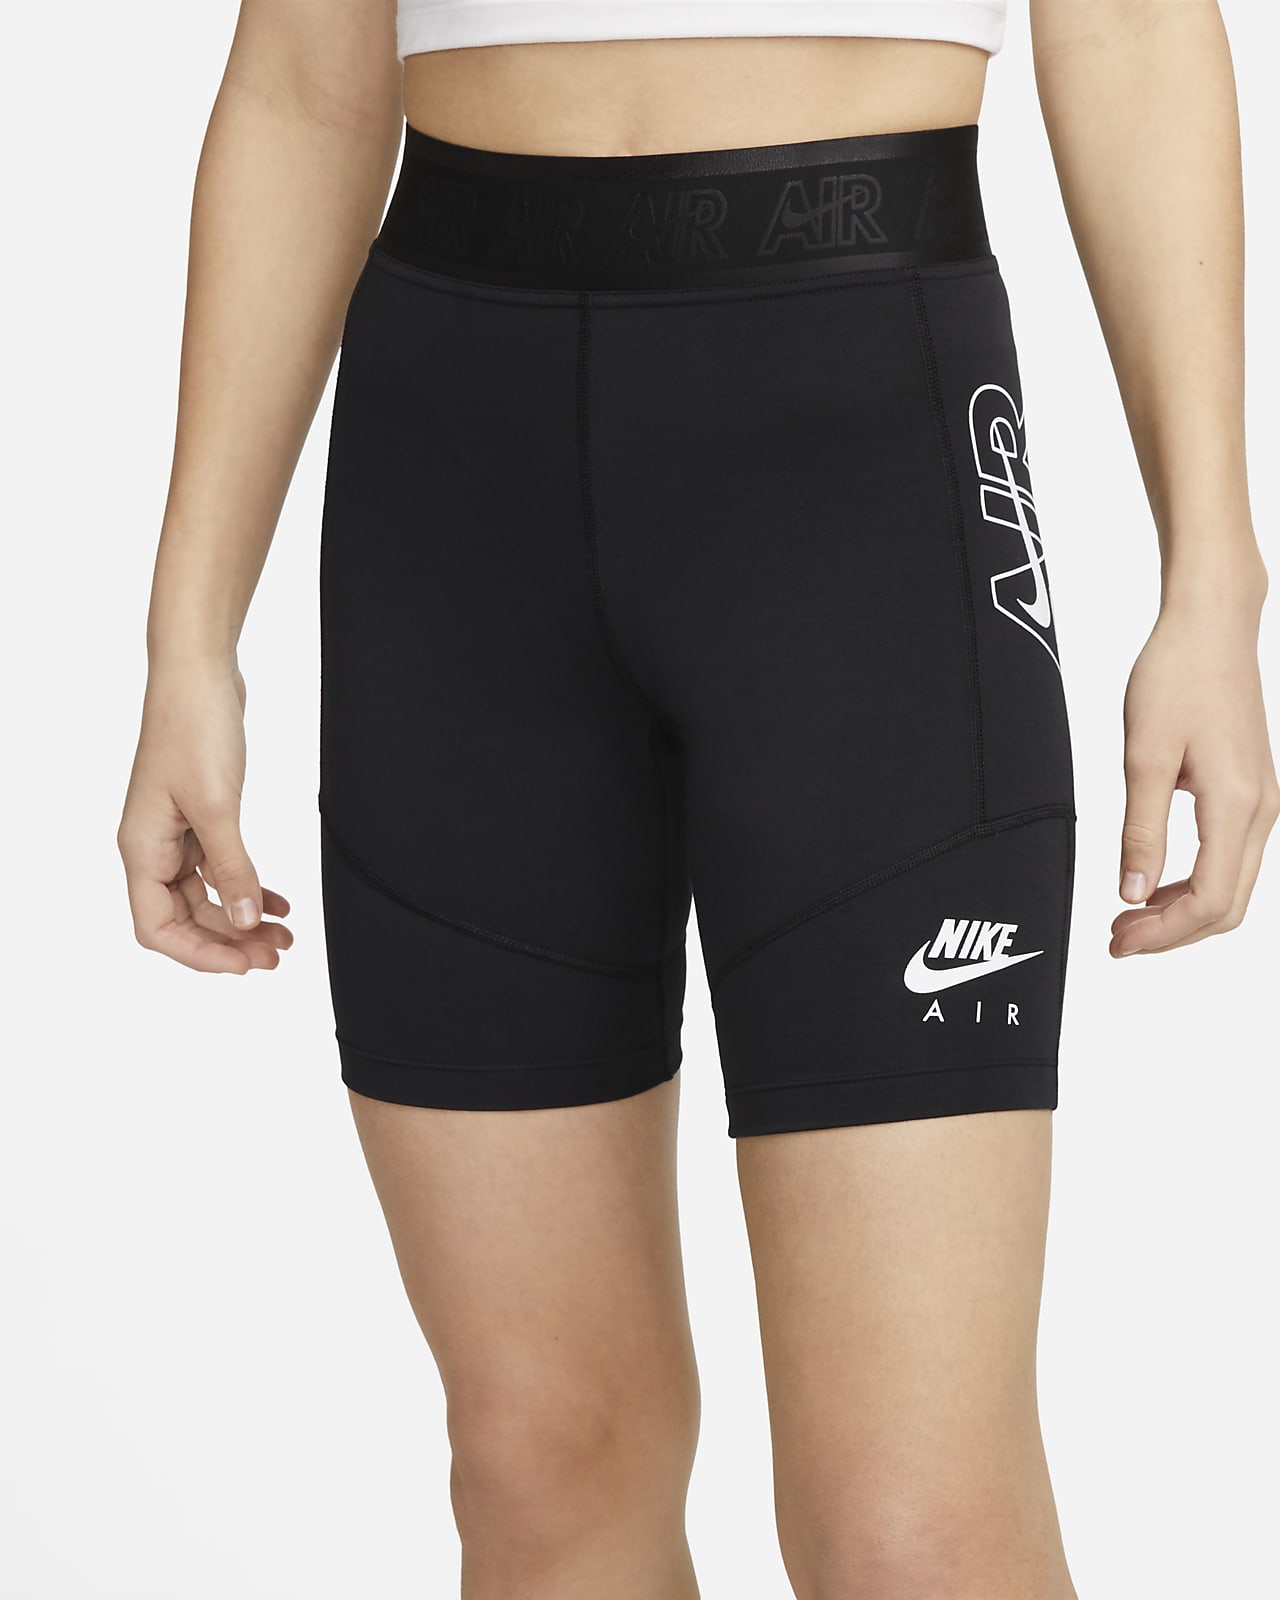 vi lav lektier At adskille Nike Air Women's Bike Shorts. Nike.com